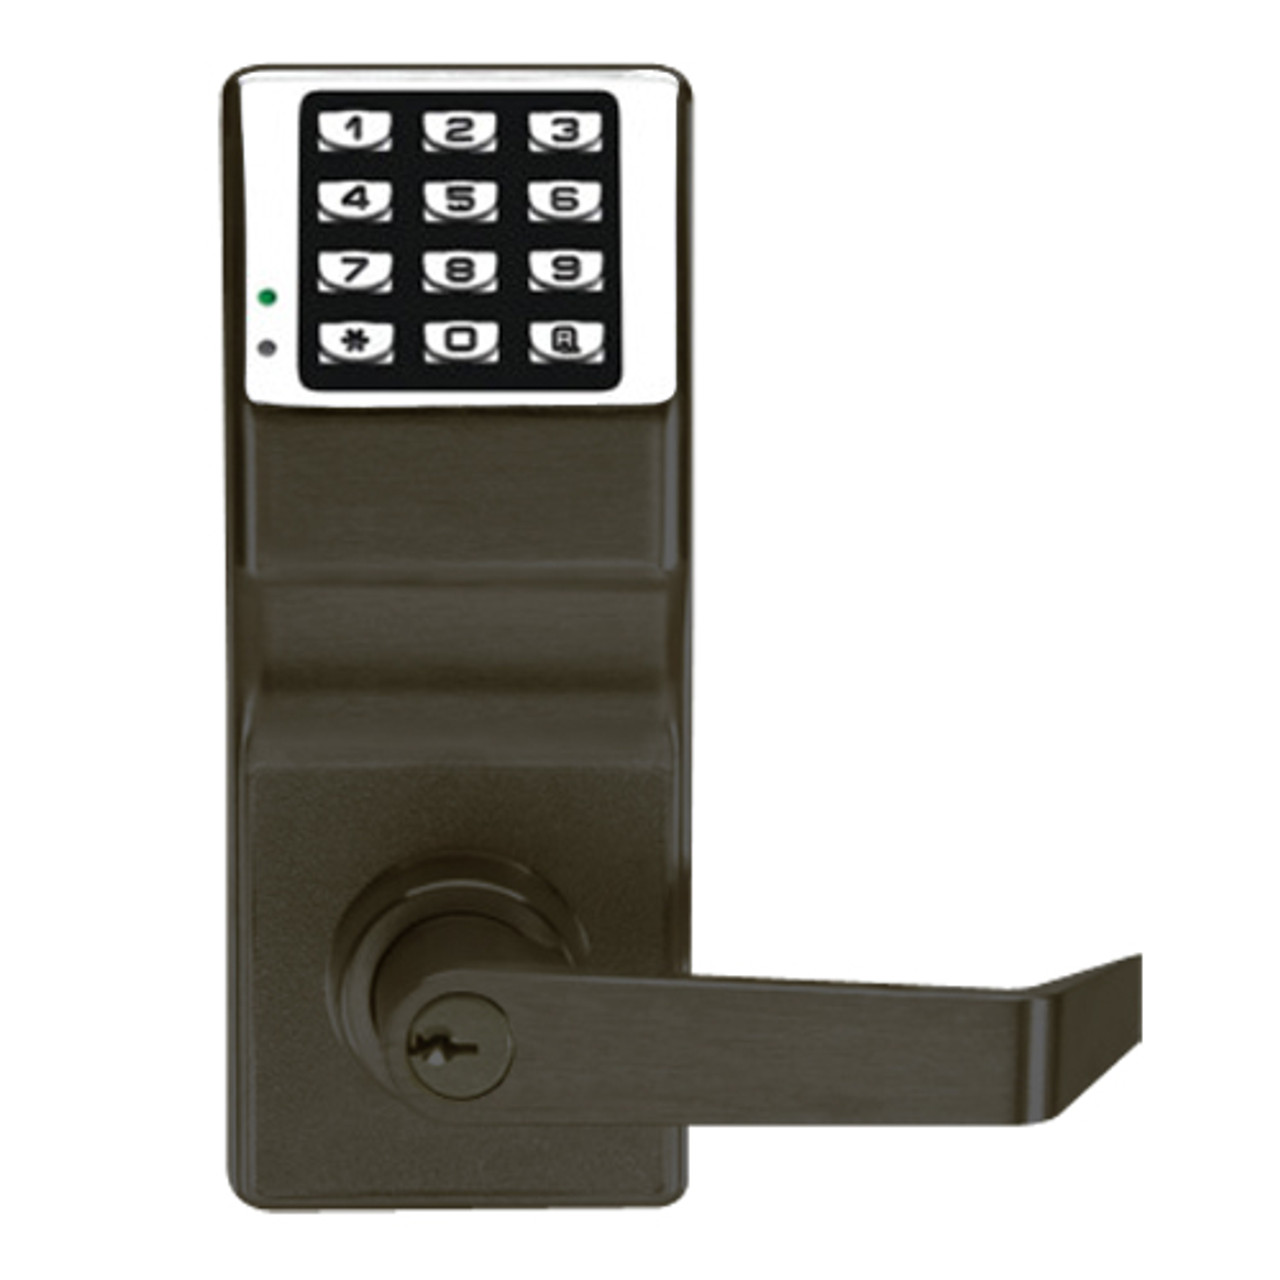 DL2700-US10B Alarm Lock Trilogy T2 Series Standalone Digital Cylindrical  Keyless Lock Leverset in Duronodic Lock Depot Inc